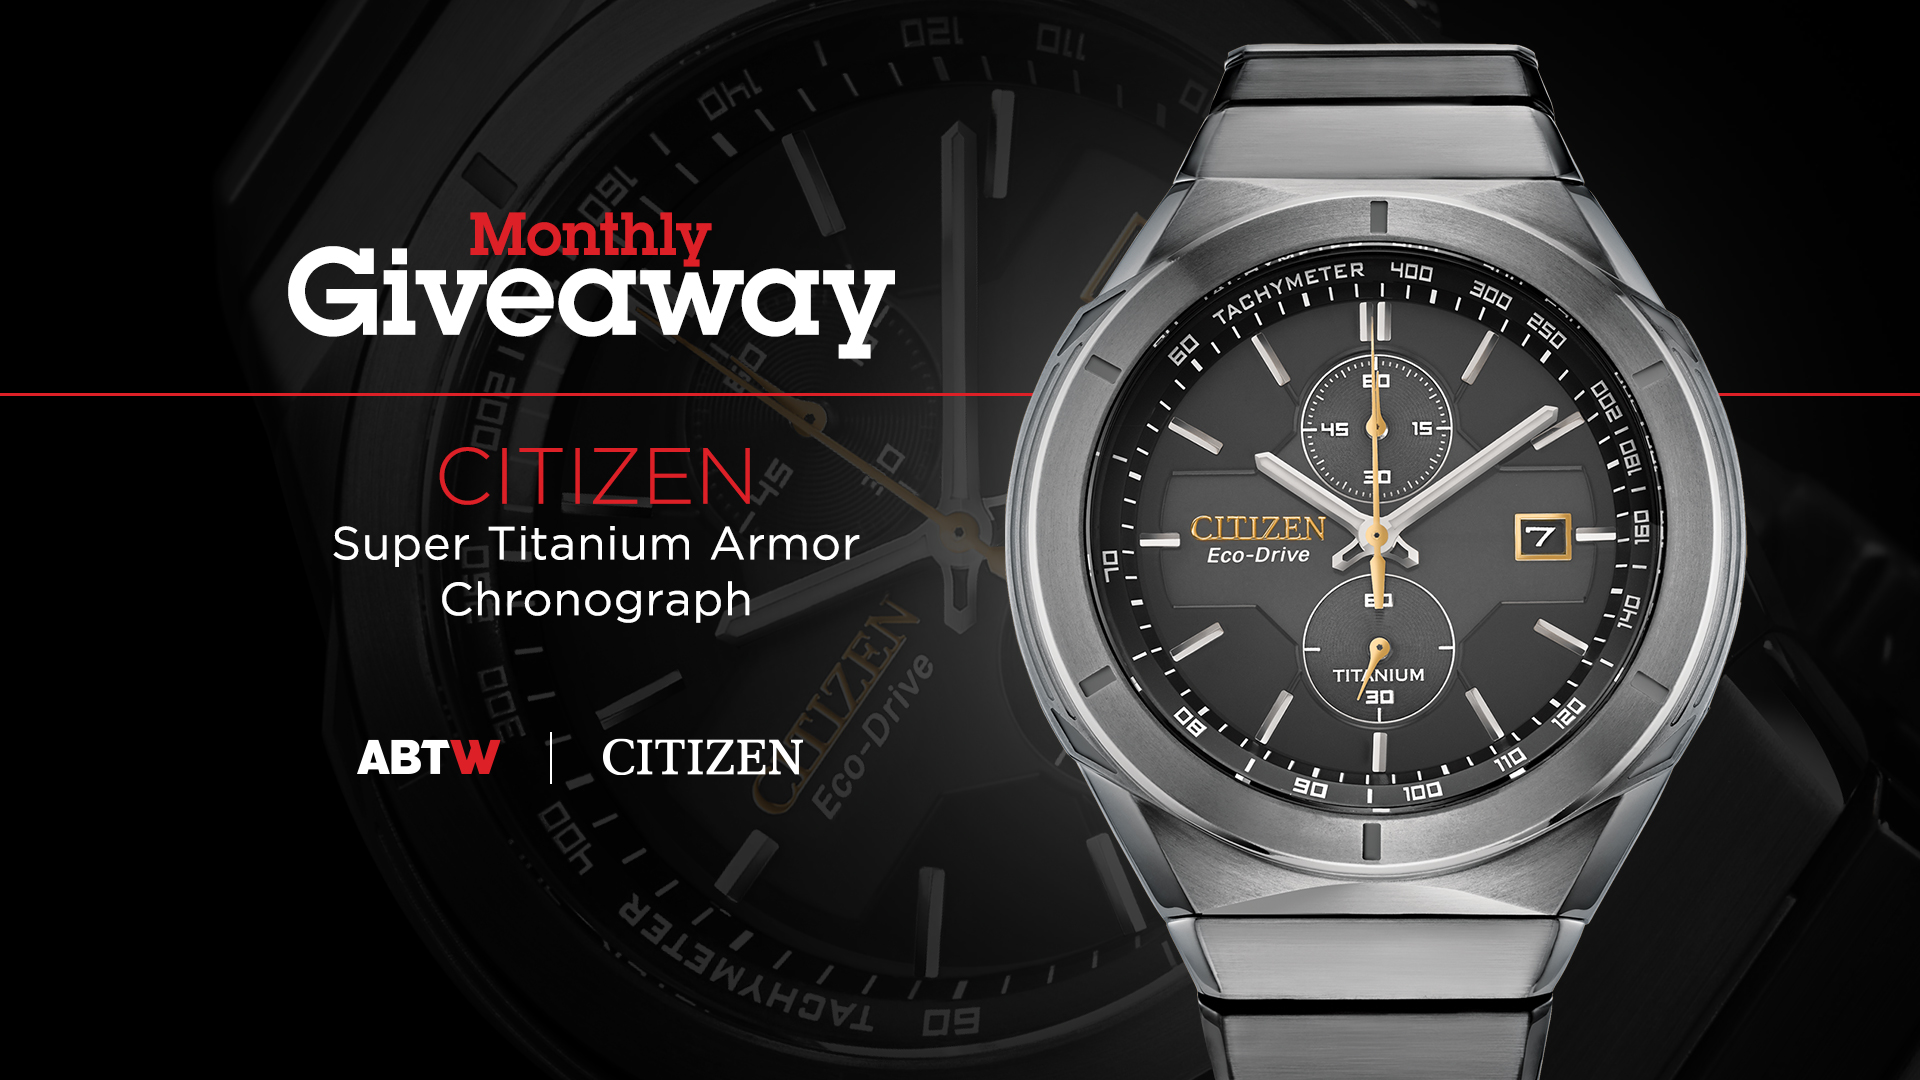 Winner Announced: Citizen Super Titanium Armor Chronograph Watch